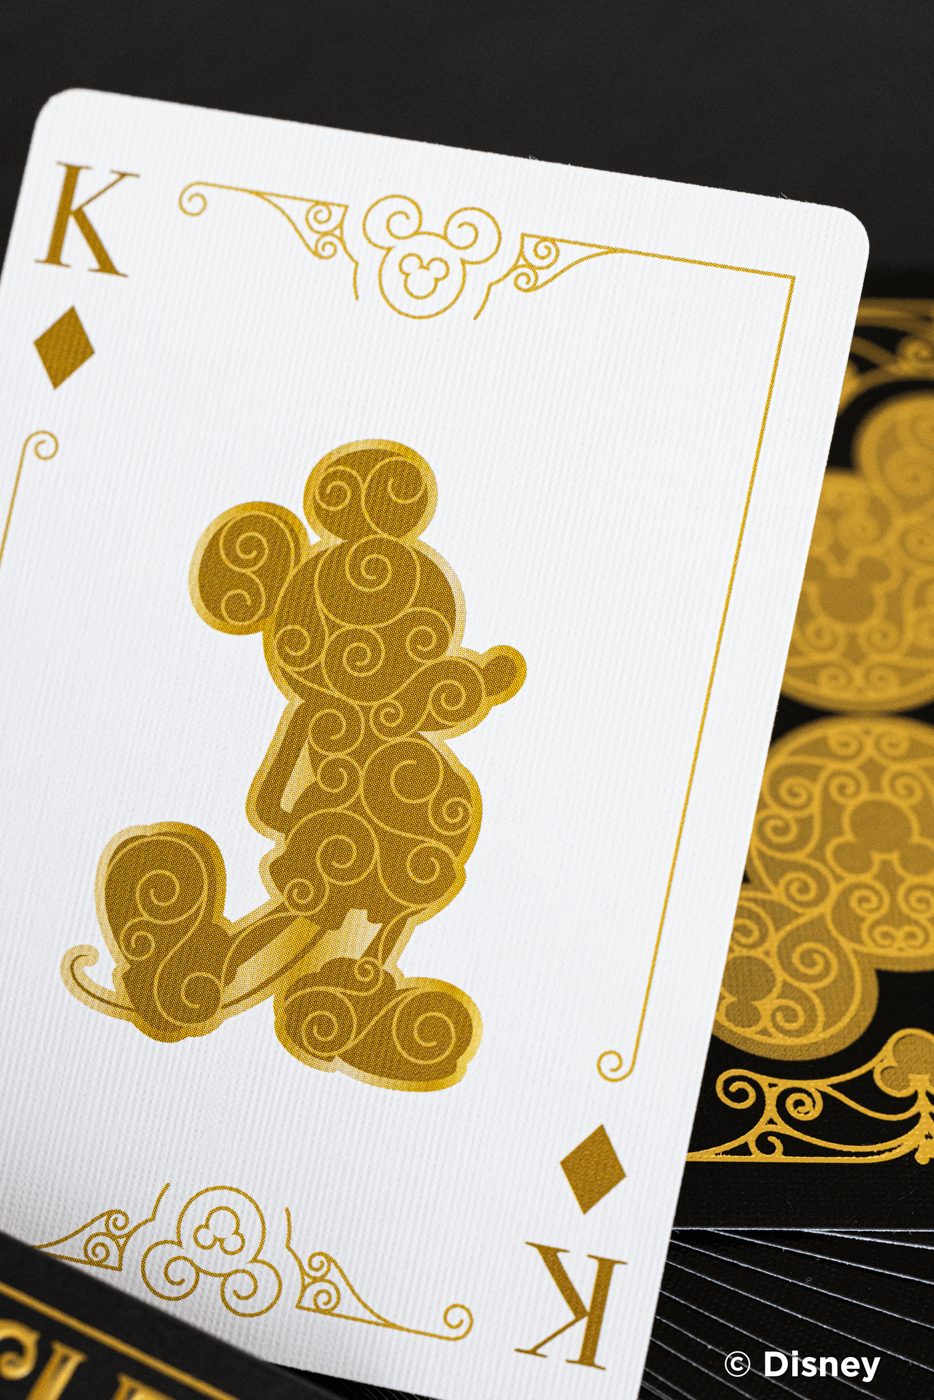 Pokerkaarten Bicycle - Mickey Black/Gold